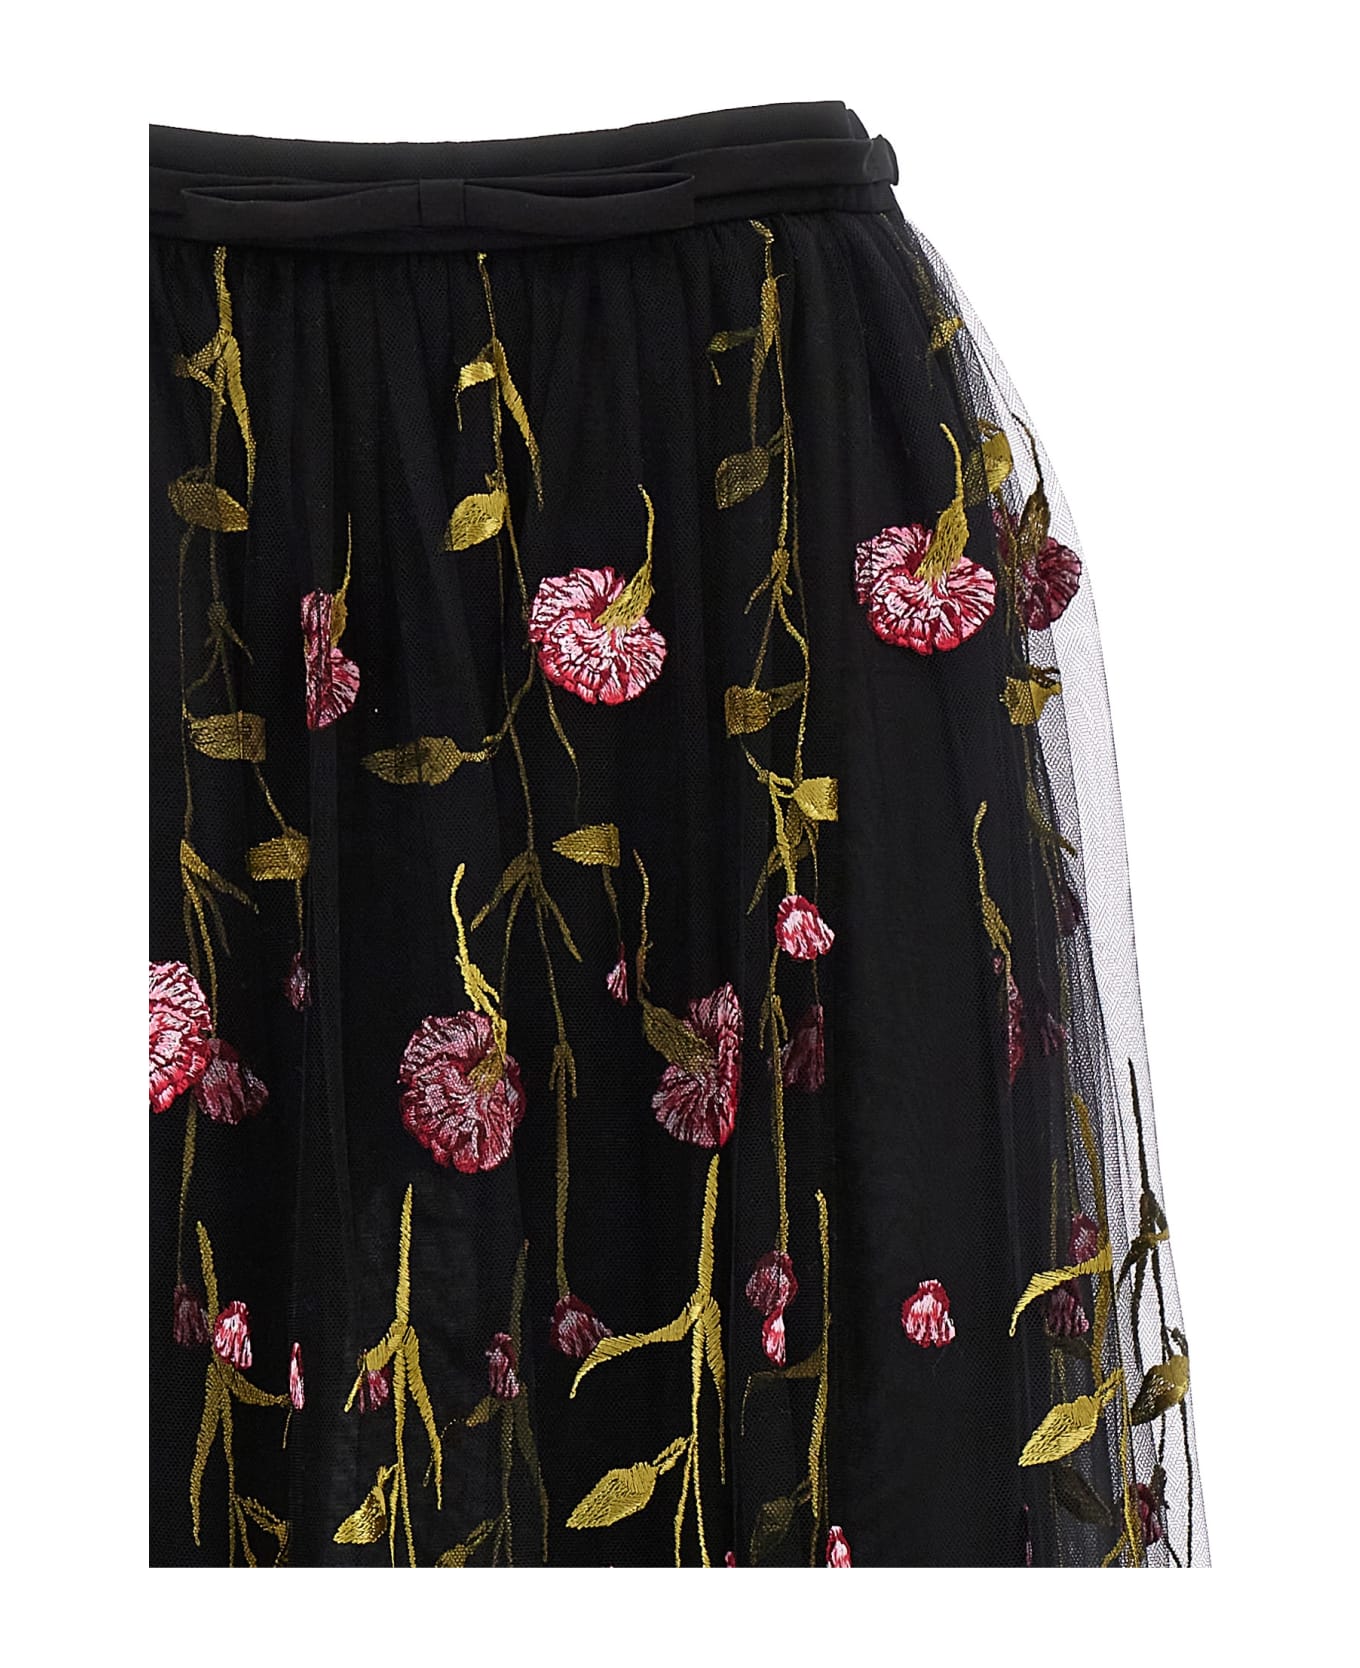 Giambattista Valli Floral Embroidery Skirt - Multicolor